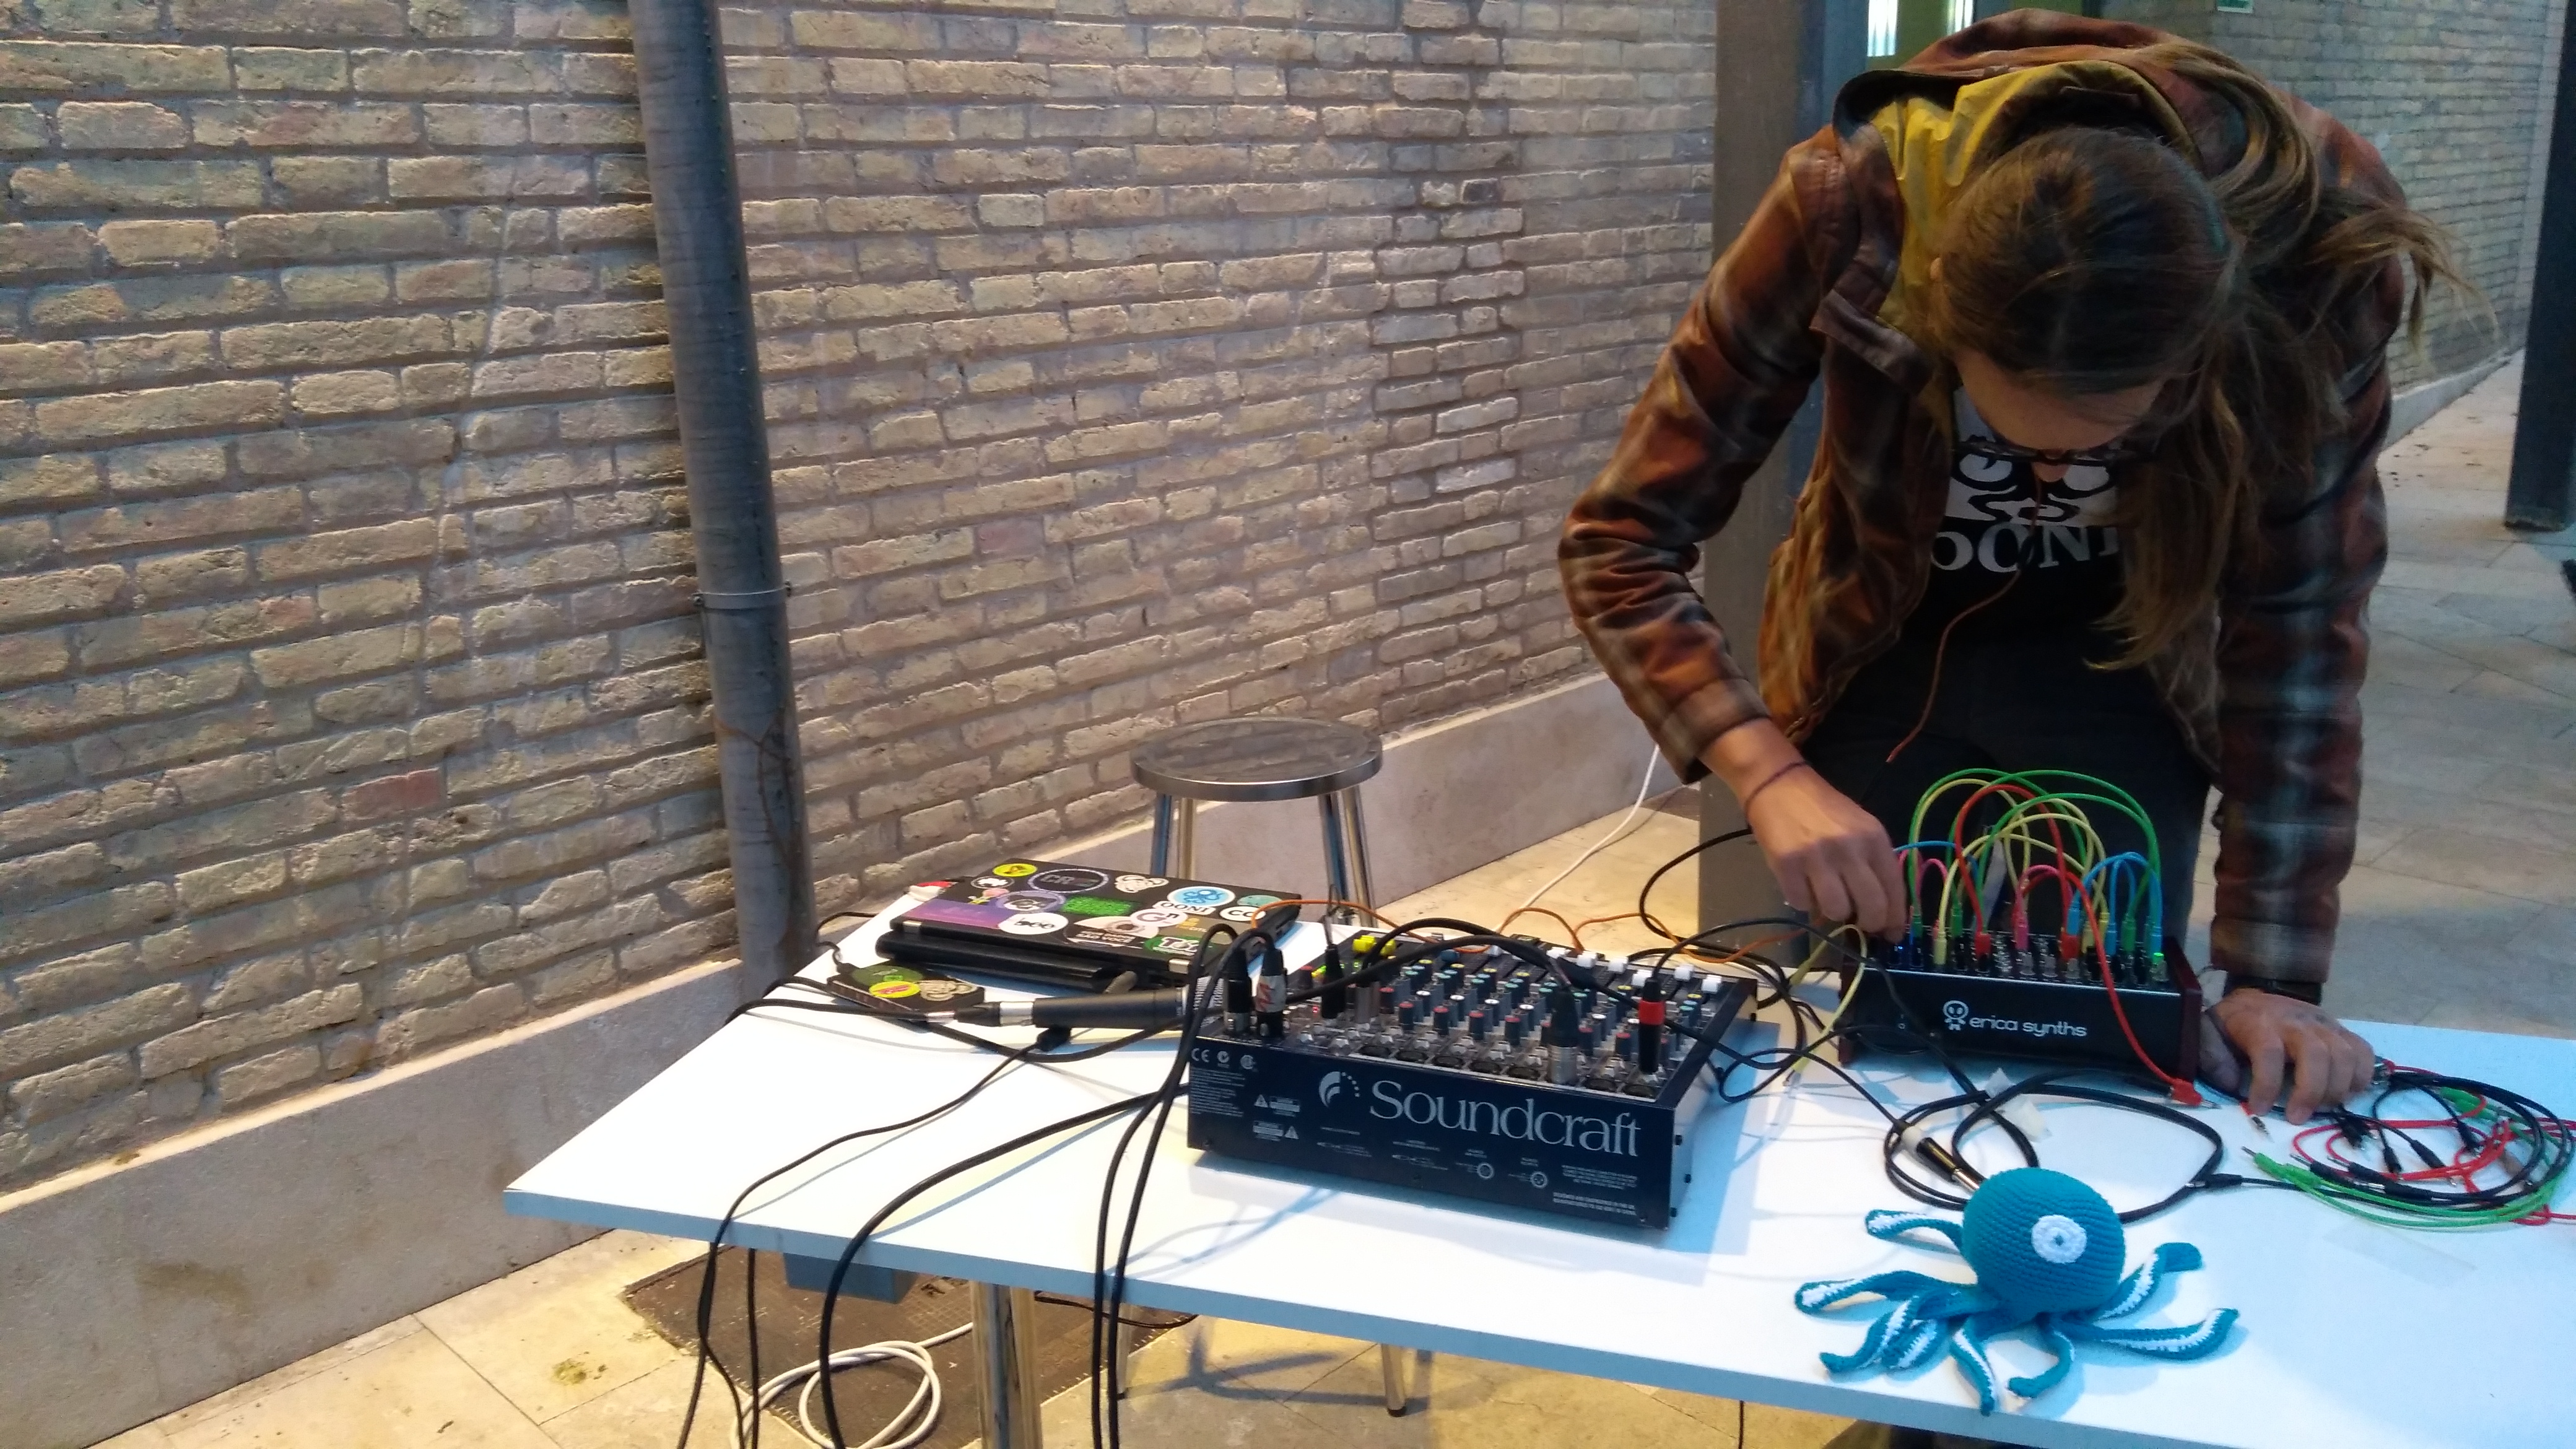 OONI’s modular synthesizer performance